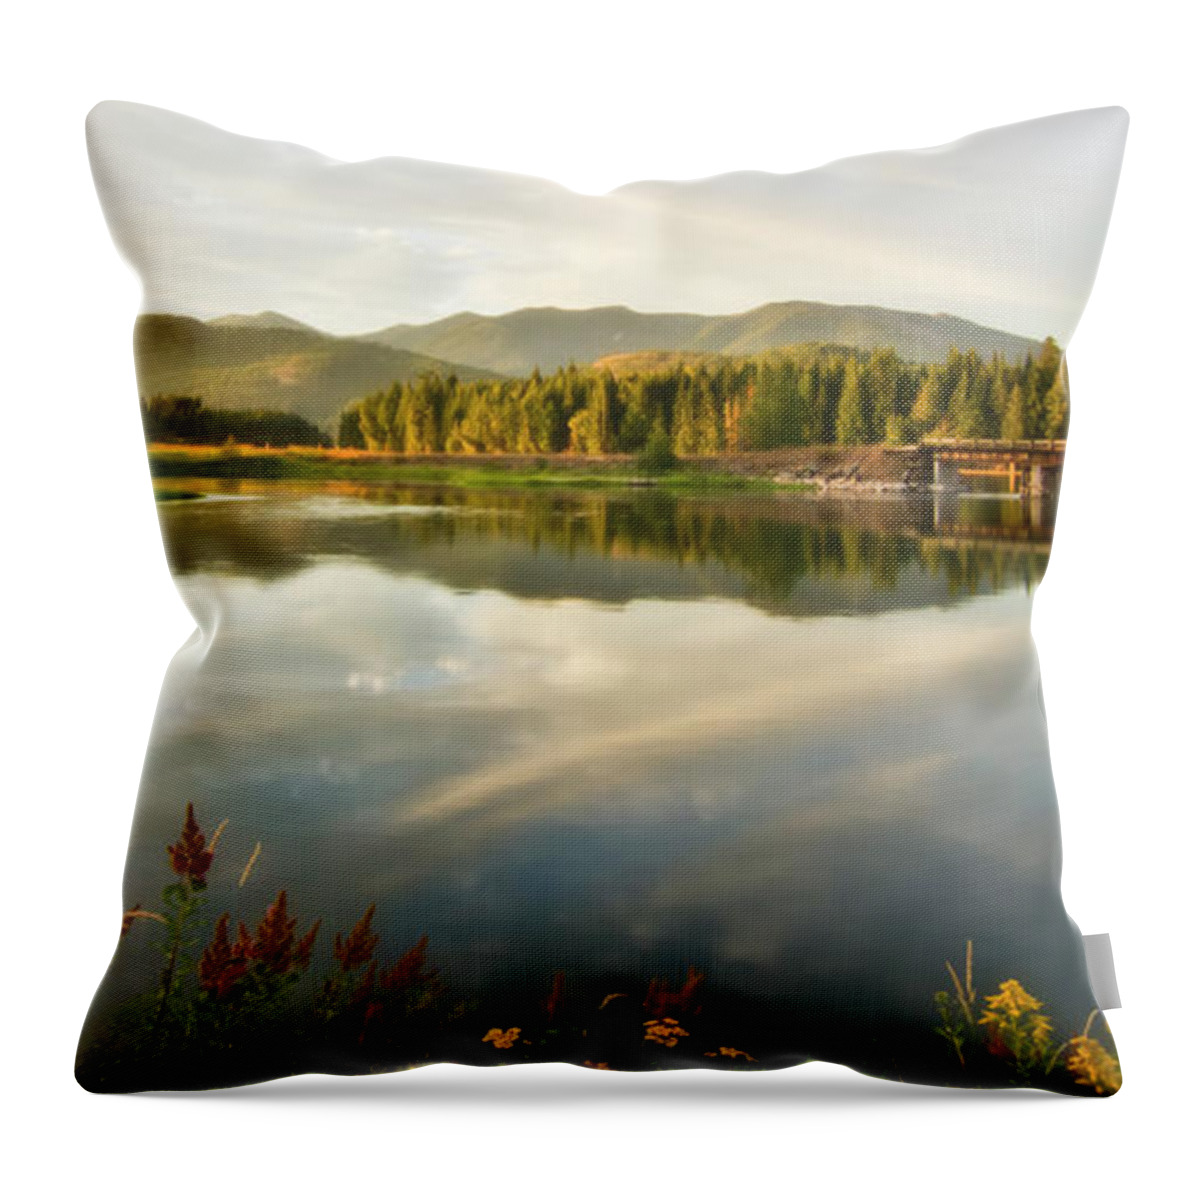 North Idaho Throw Pillow featuring the photograph Deer Island Bridge by Albert Seger